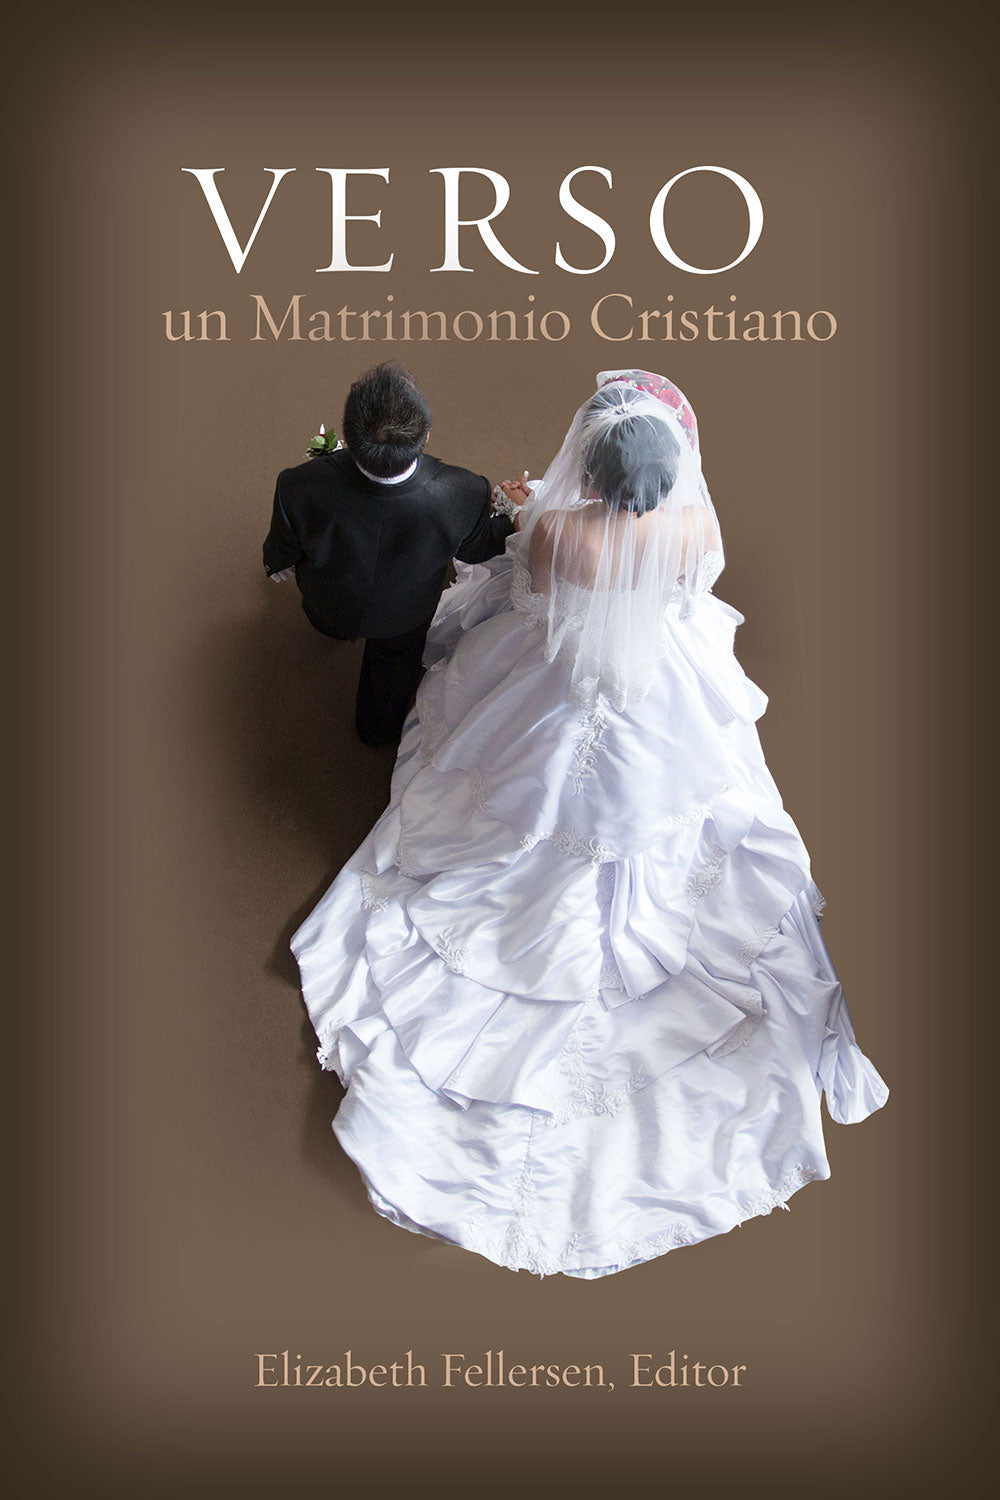 Towards A Christian Marriage (Verso un Matrimonio Cristiano)